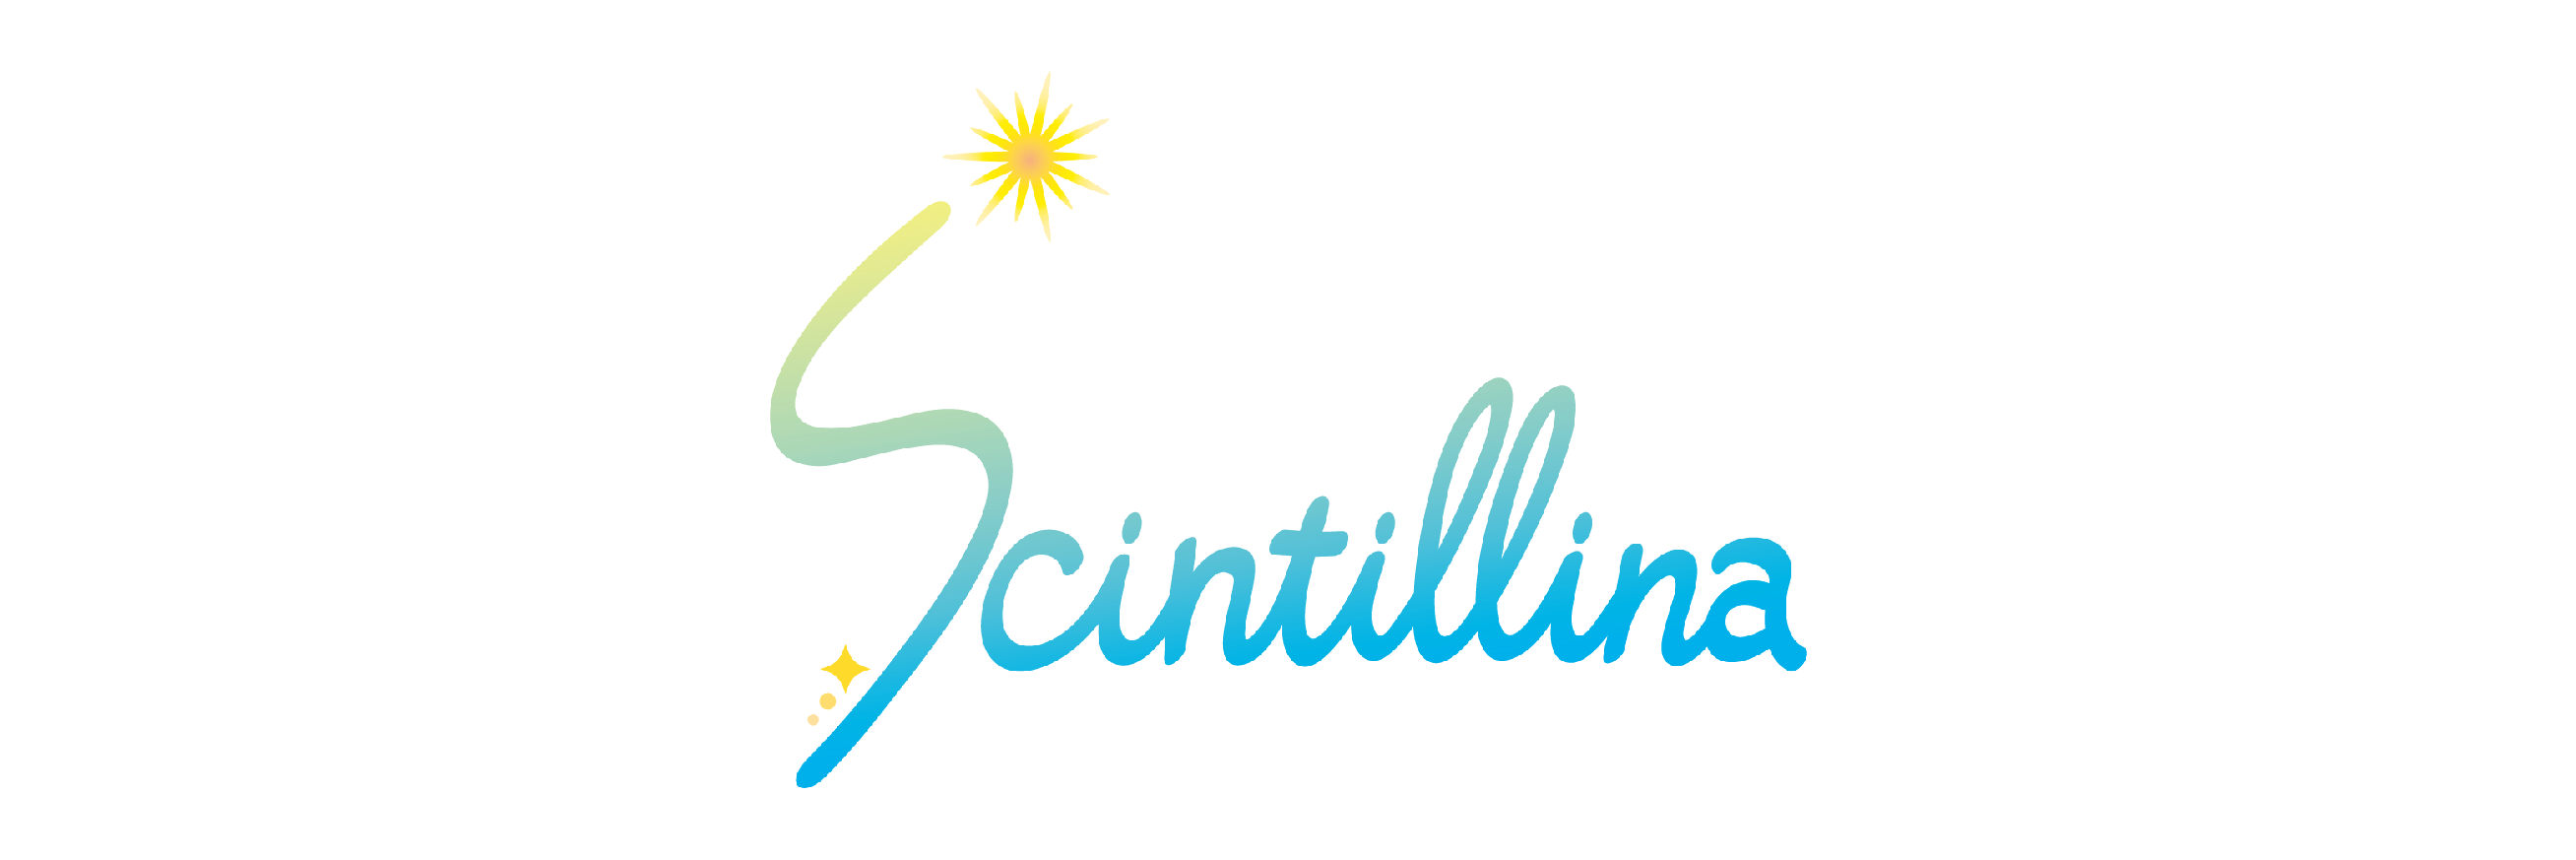 Scintillina